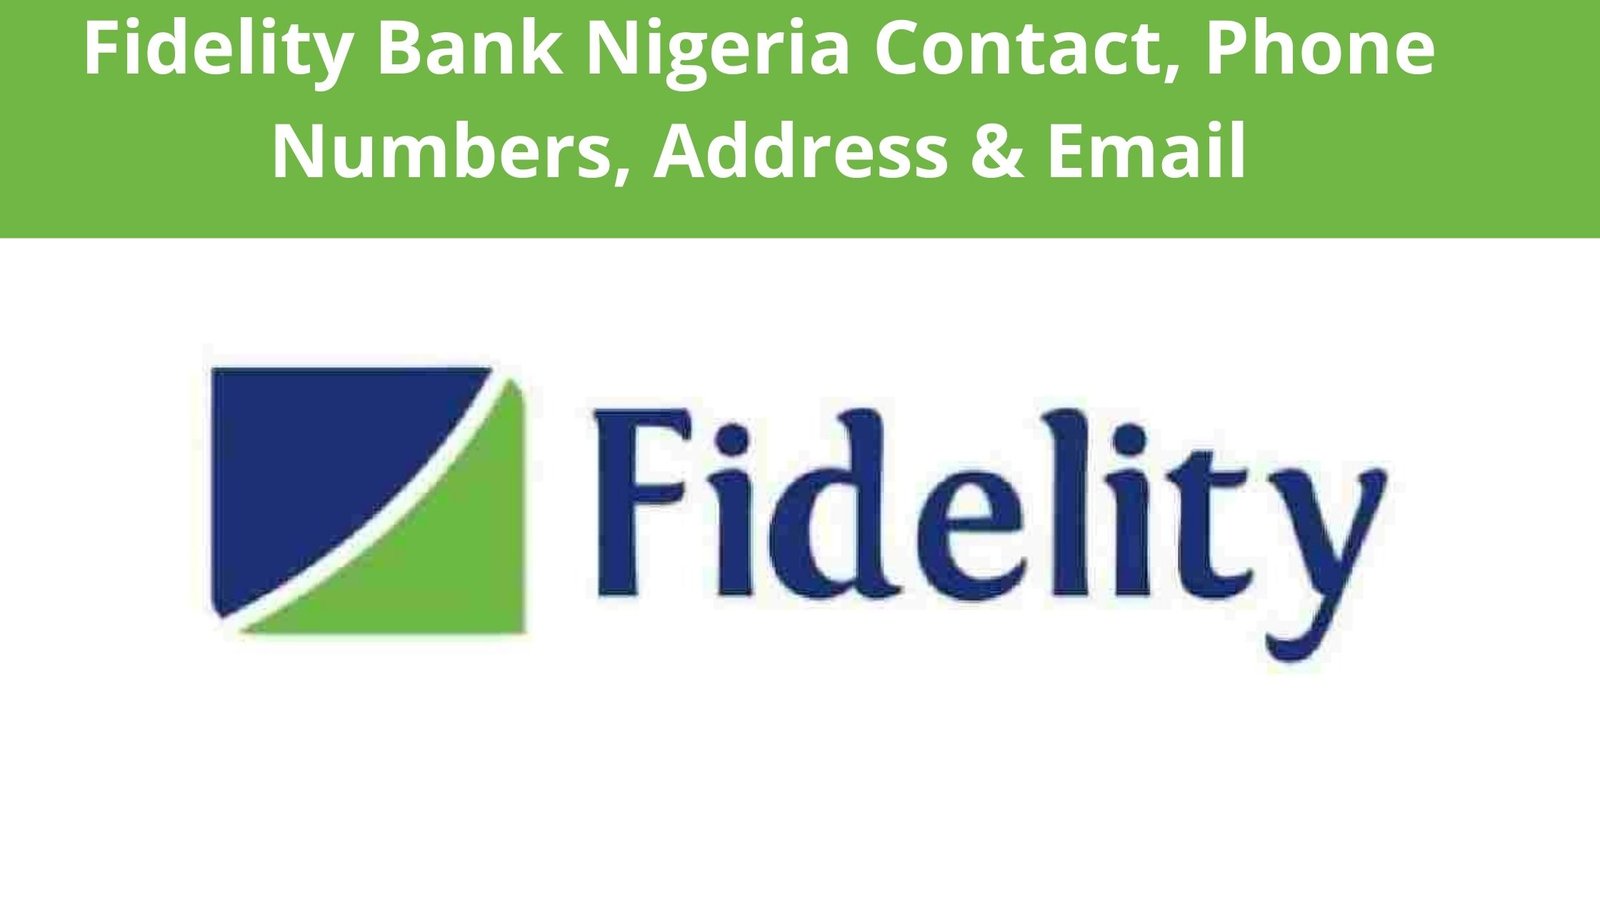 Fidelity Bank Nigeria Contact